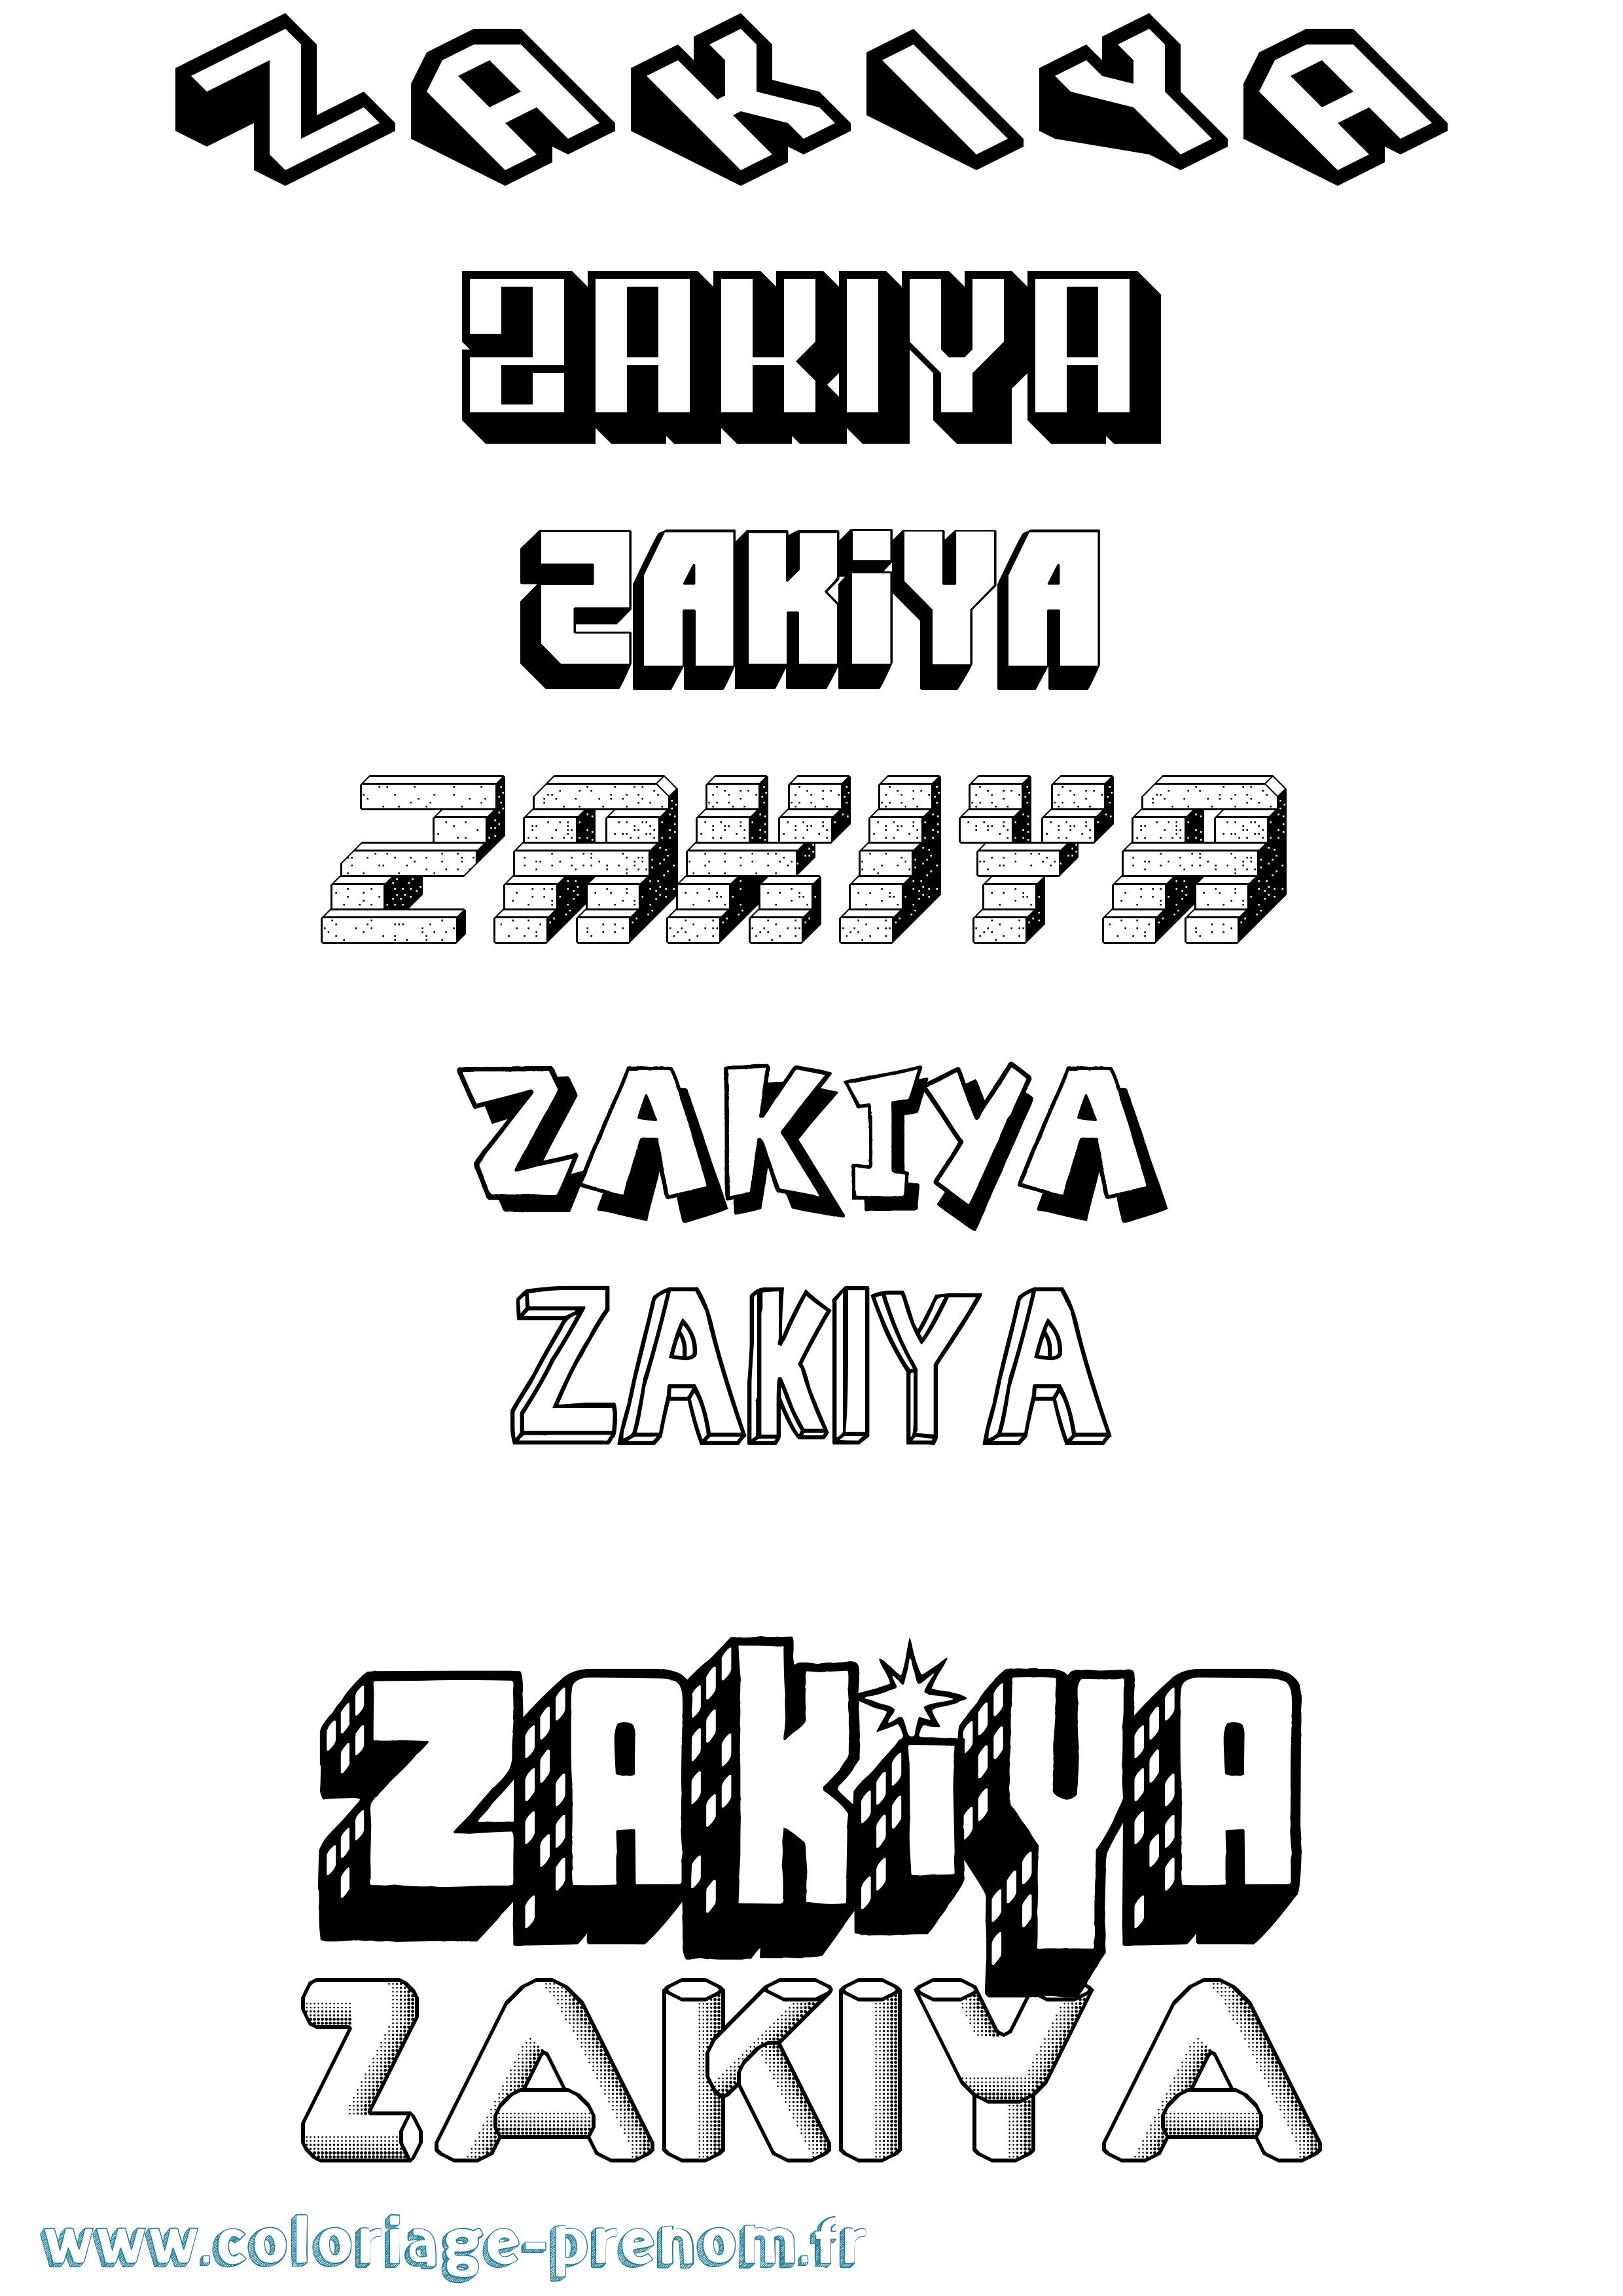 Coloriage prénom Zakiya Effet 3D